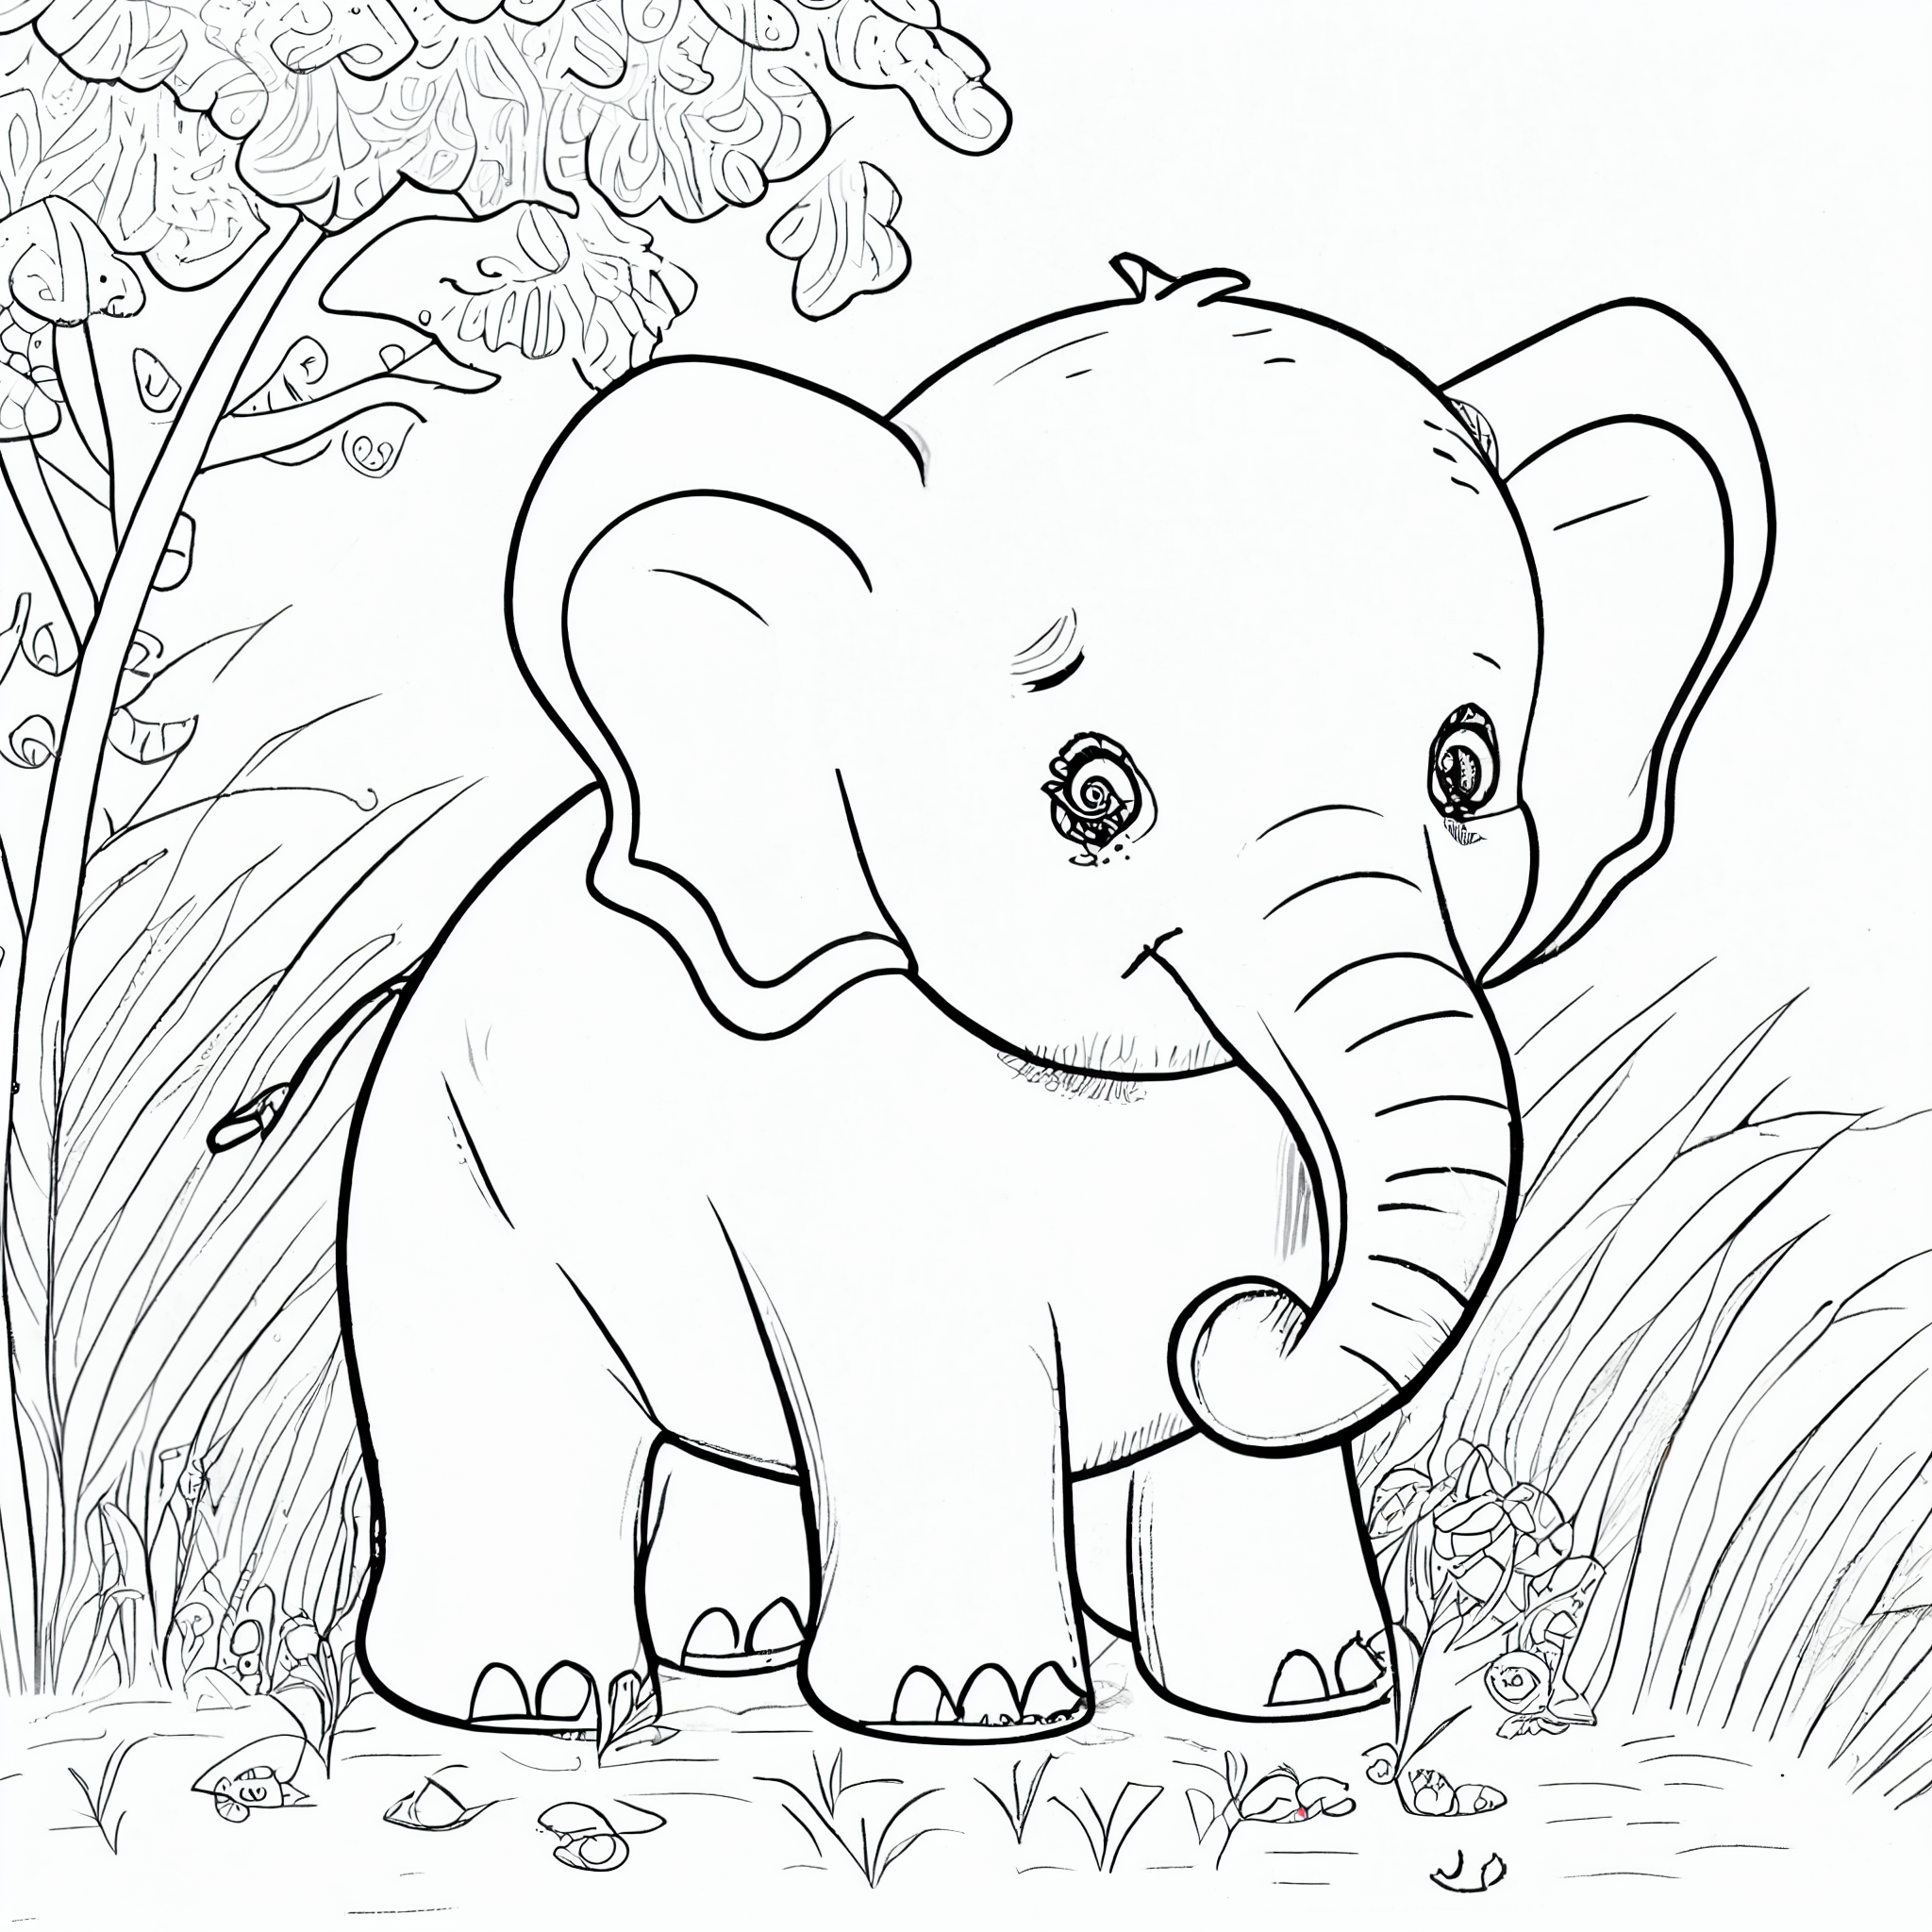 Contoh Gambar Sketsa Gajah